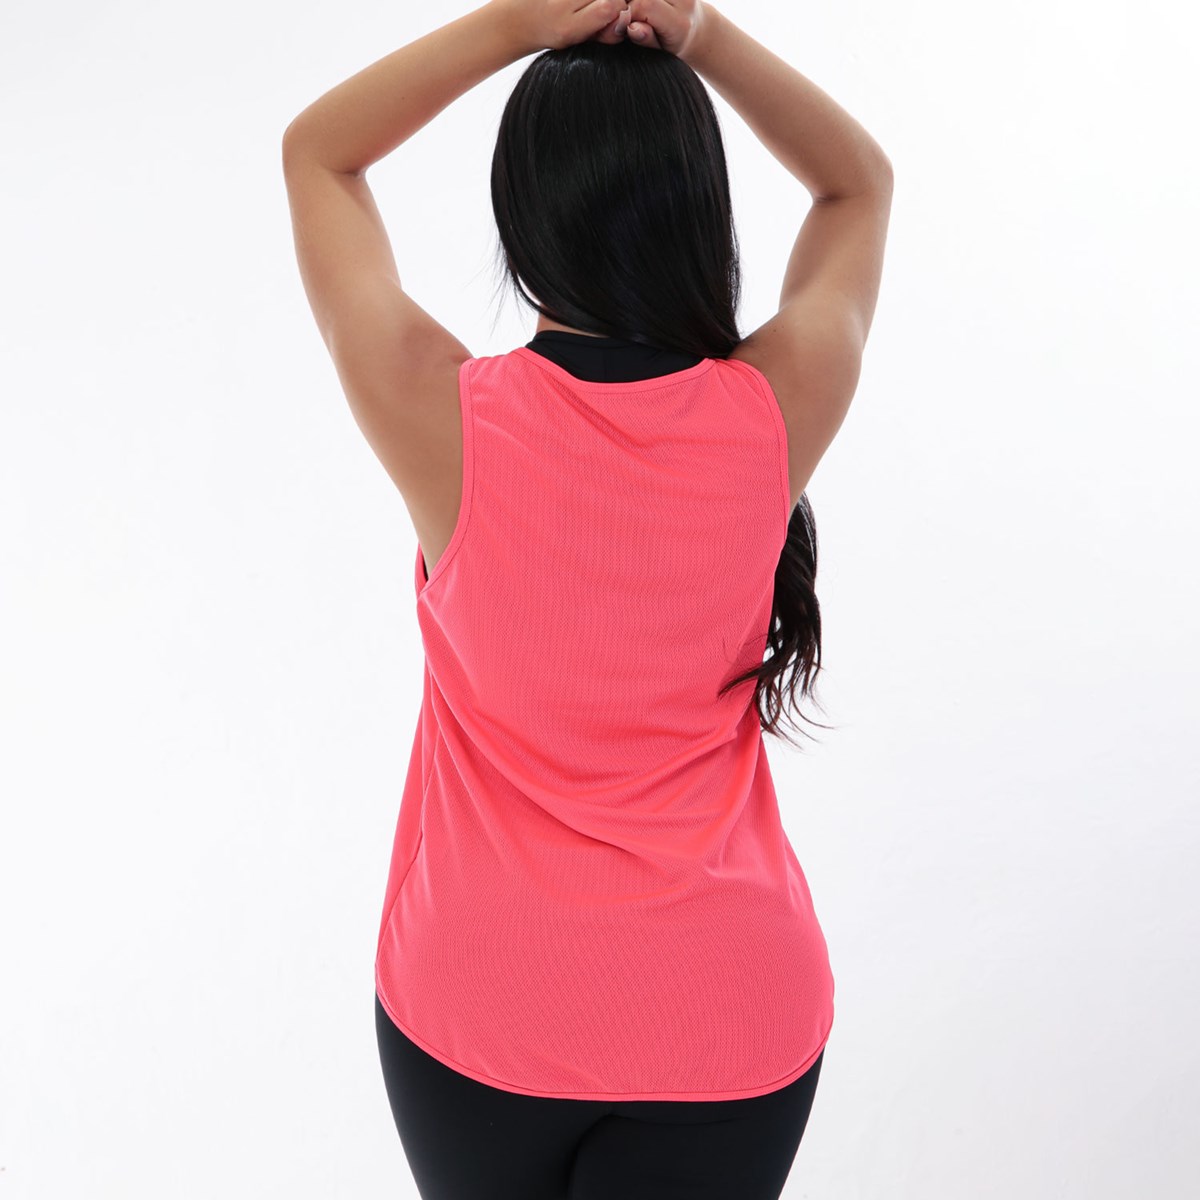 Regata Feminina Fitness Rosa Neon em Dry Fit | Ref: 4.4.4388-39